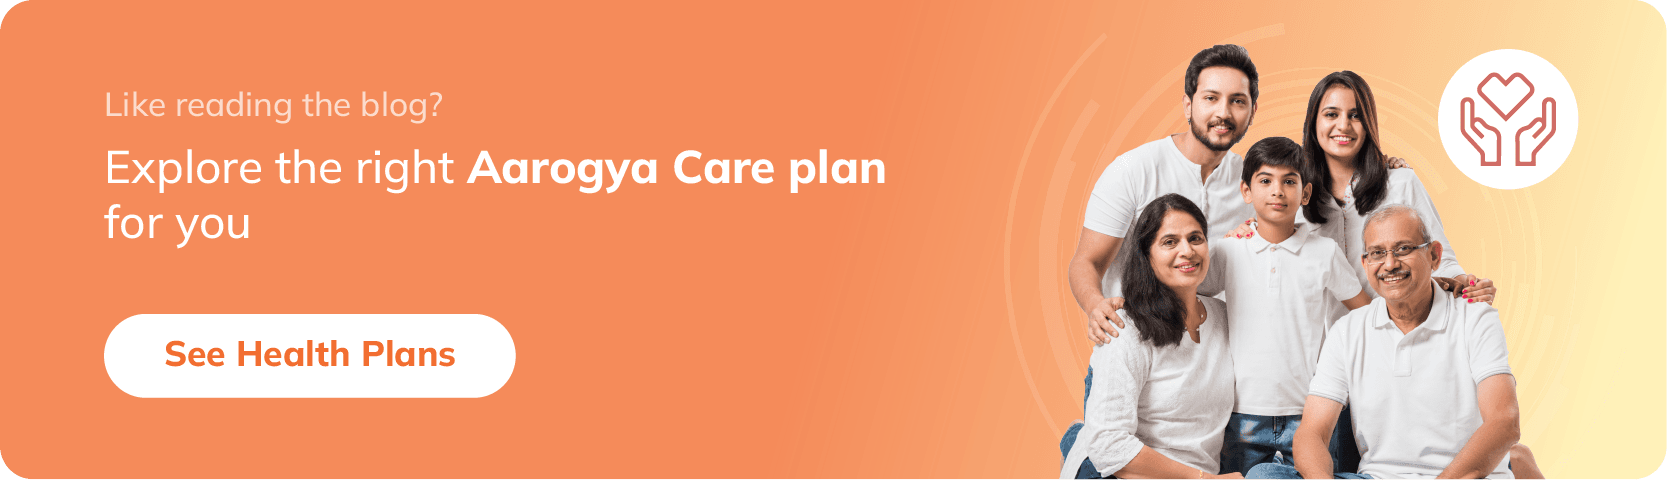 Prepaid Health Care: 7 Benefits of Aarogya Care Health Plans banner